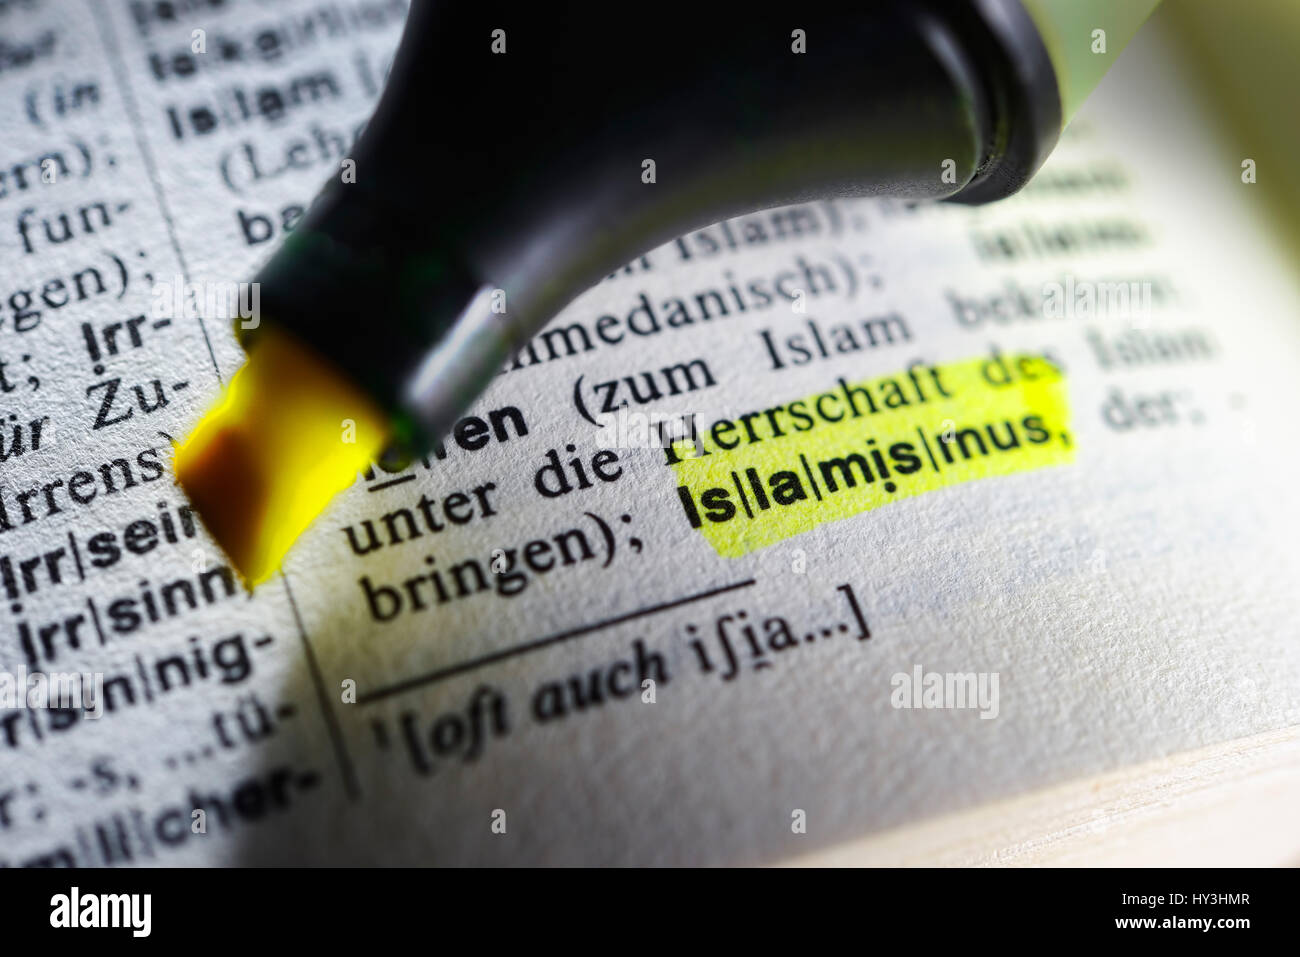 The word Islamism in a dictionary, Das Wort Islamismus in einem Wörterbuch Stock Photo